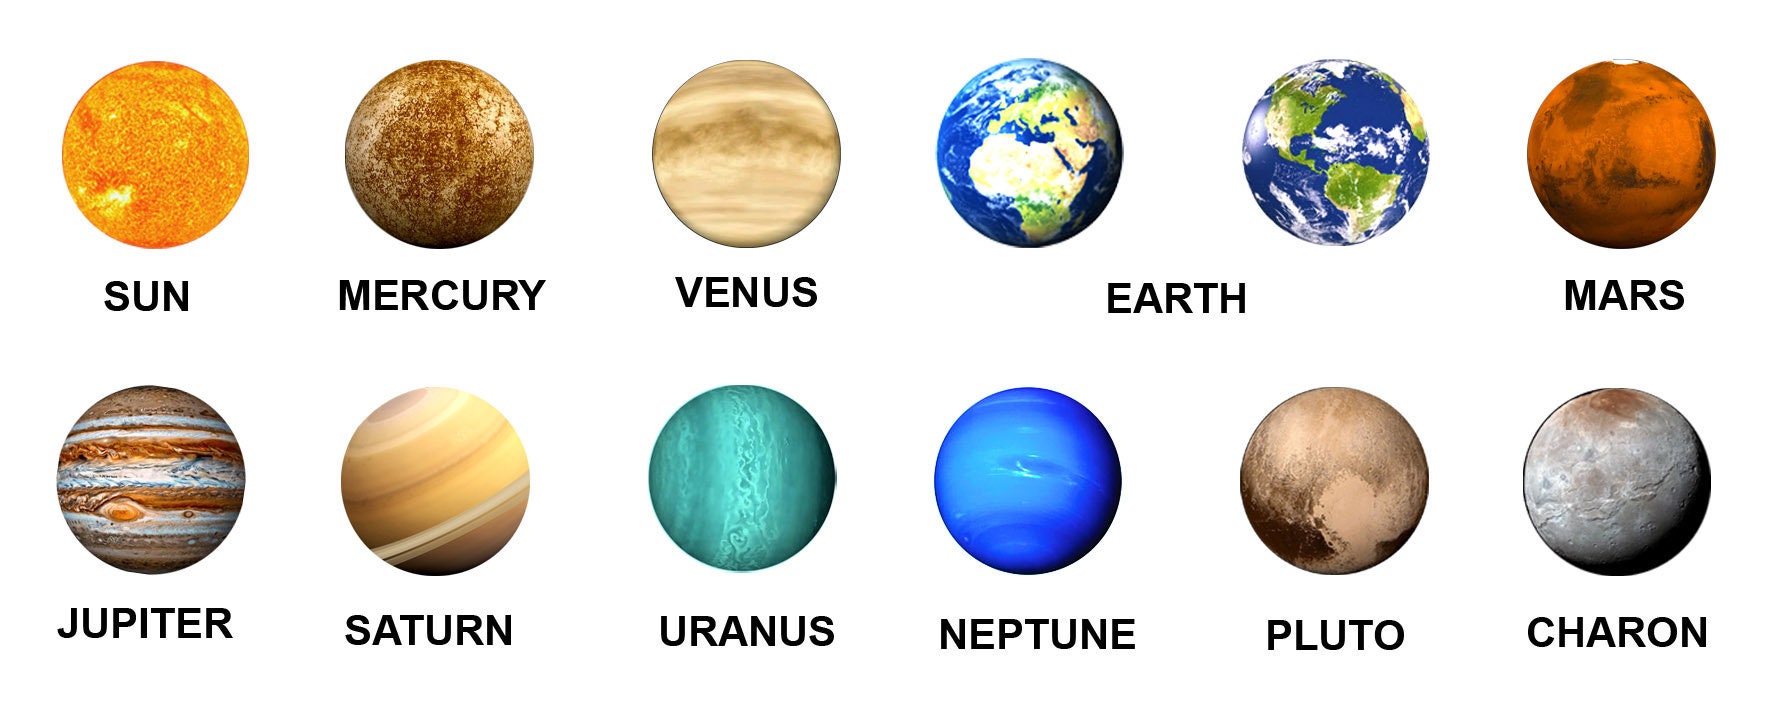 Нептун юпитер луна. Mercury Venus Earth Mars Jupiter Saturn Uranus Neptune.